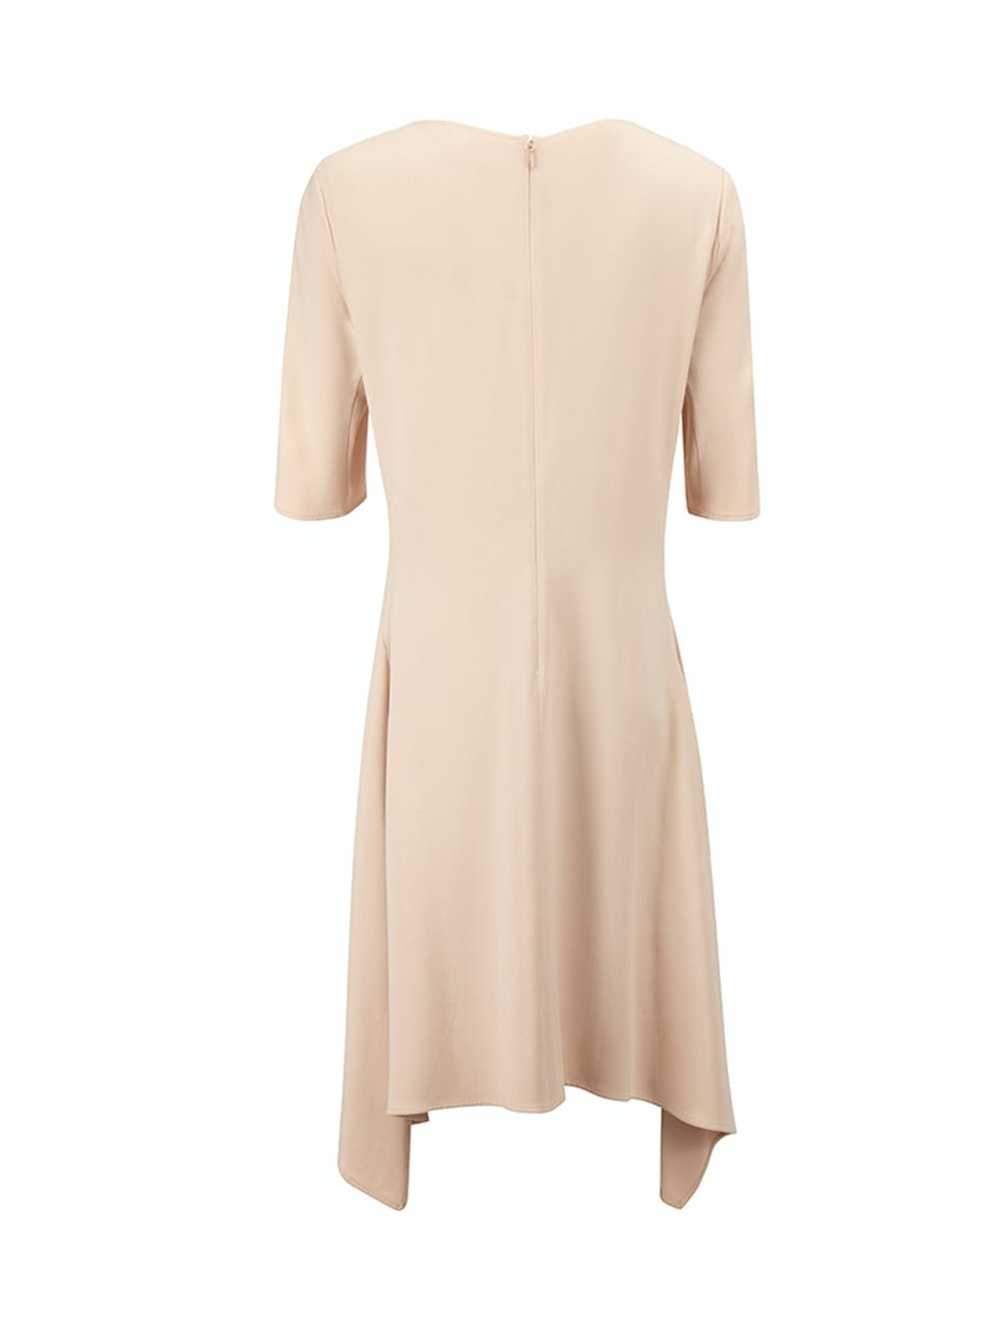 Stella McCartney Pink Draped Knee Length Dress - image 3